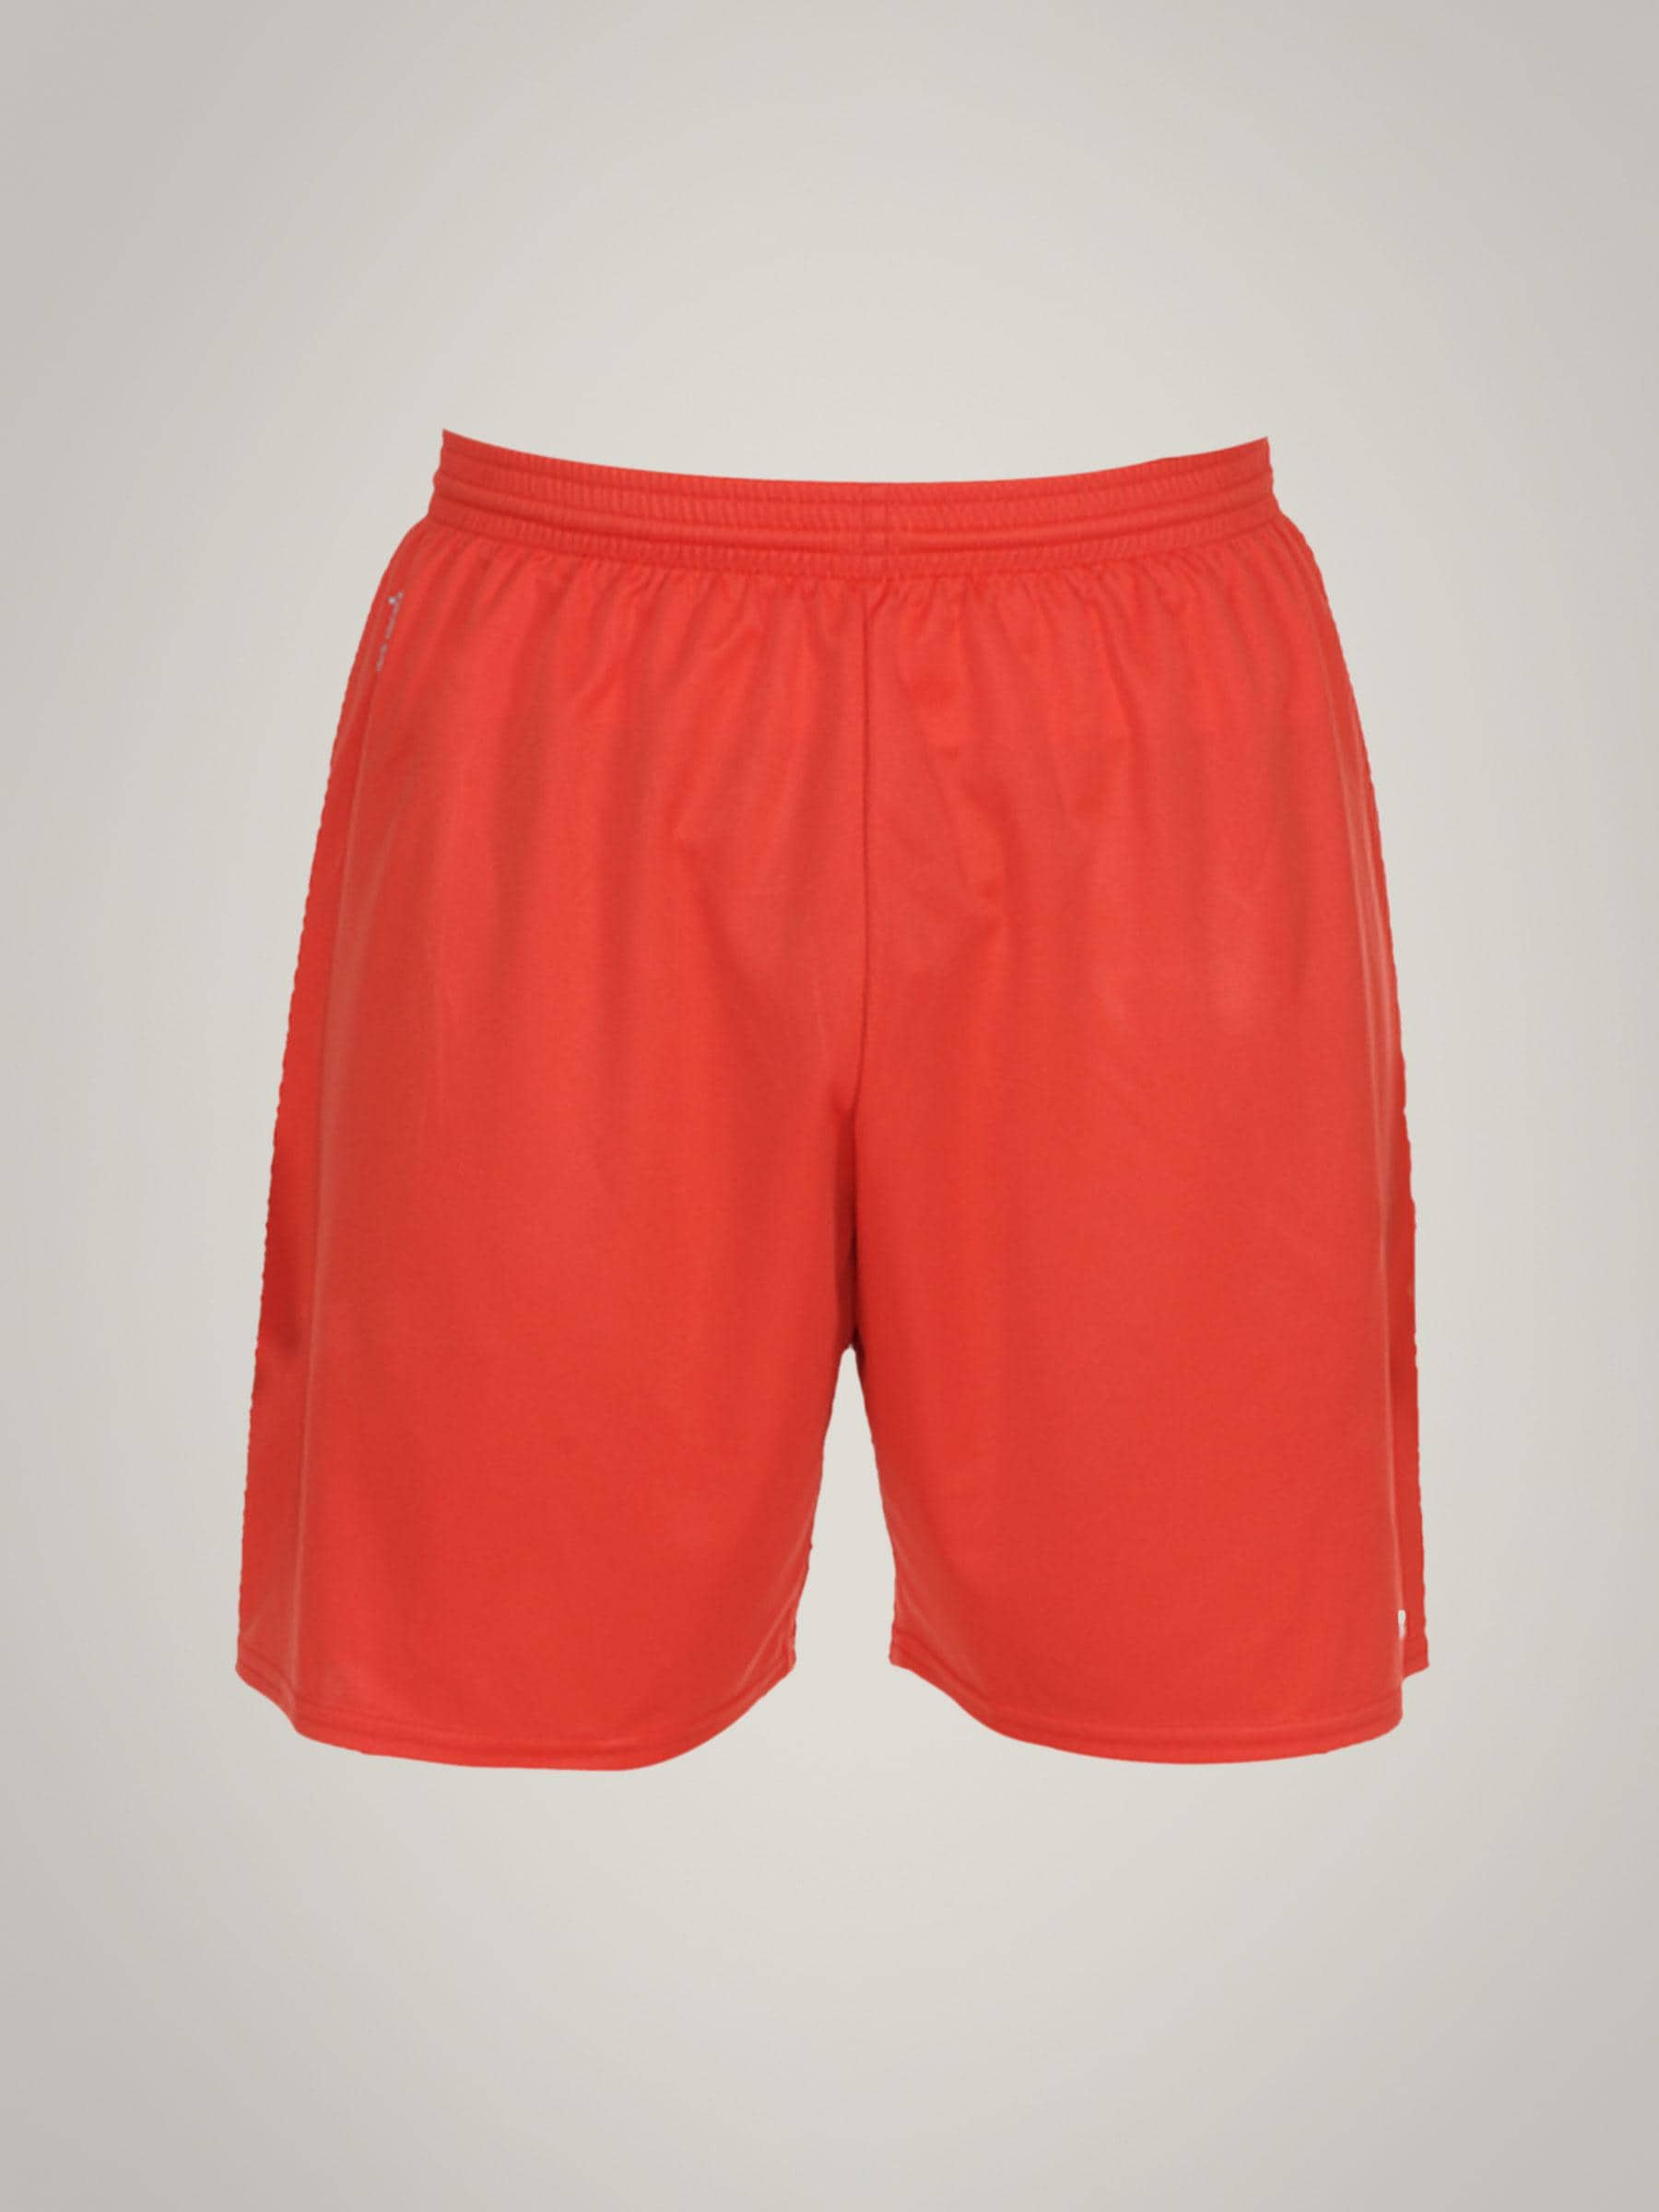 Kipsta Men Red Shorts